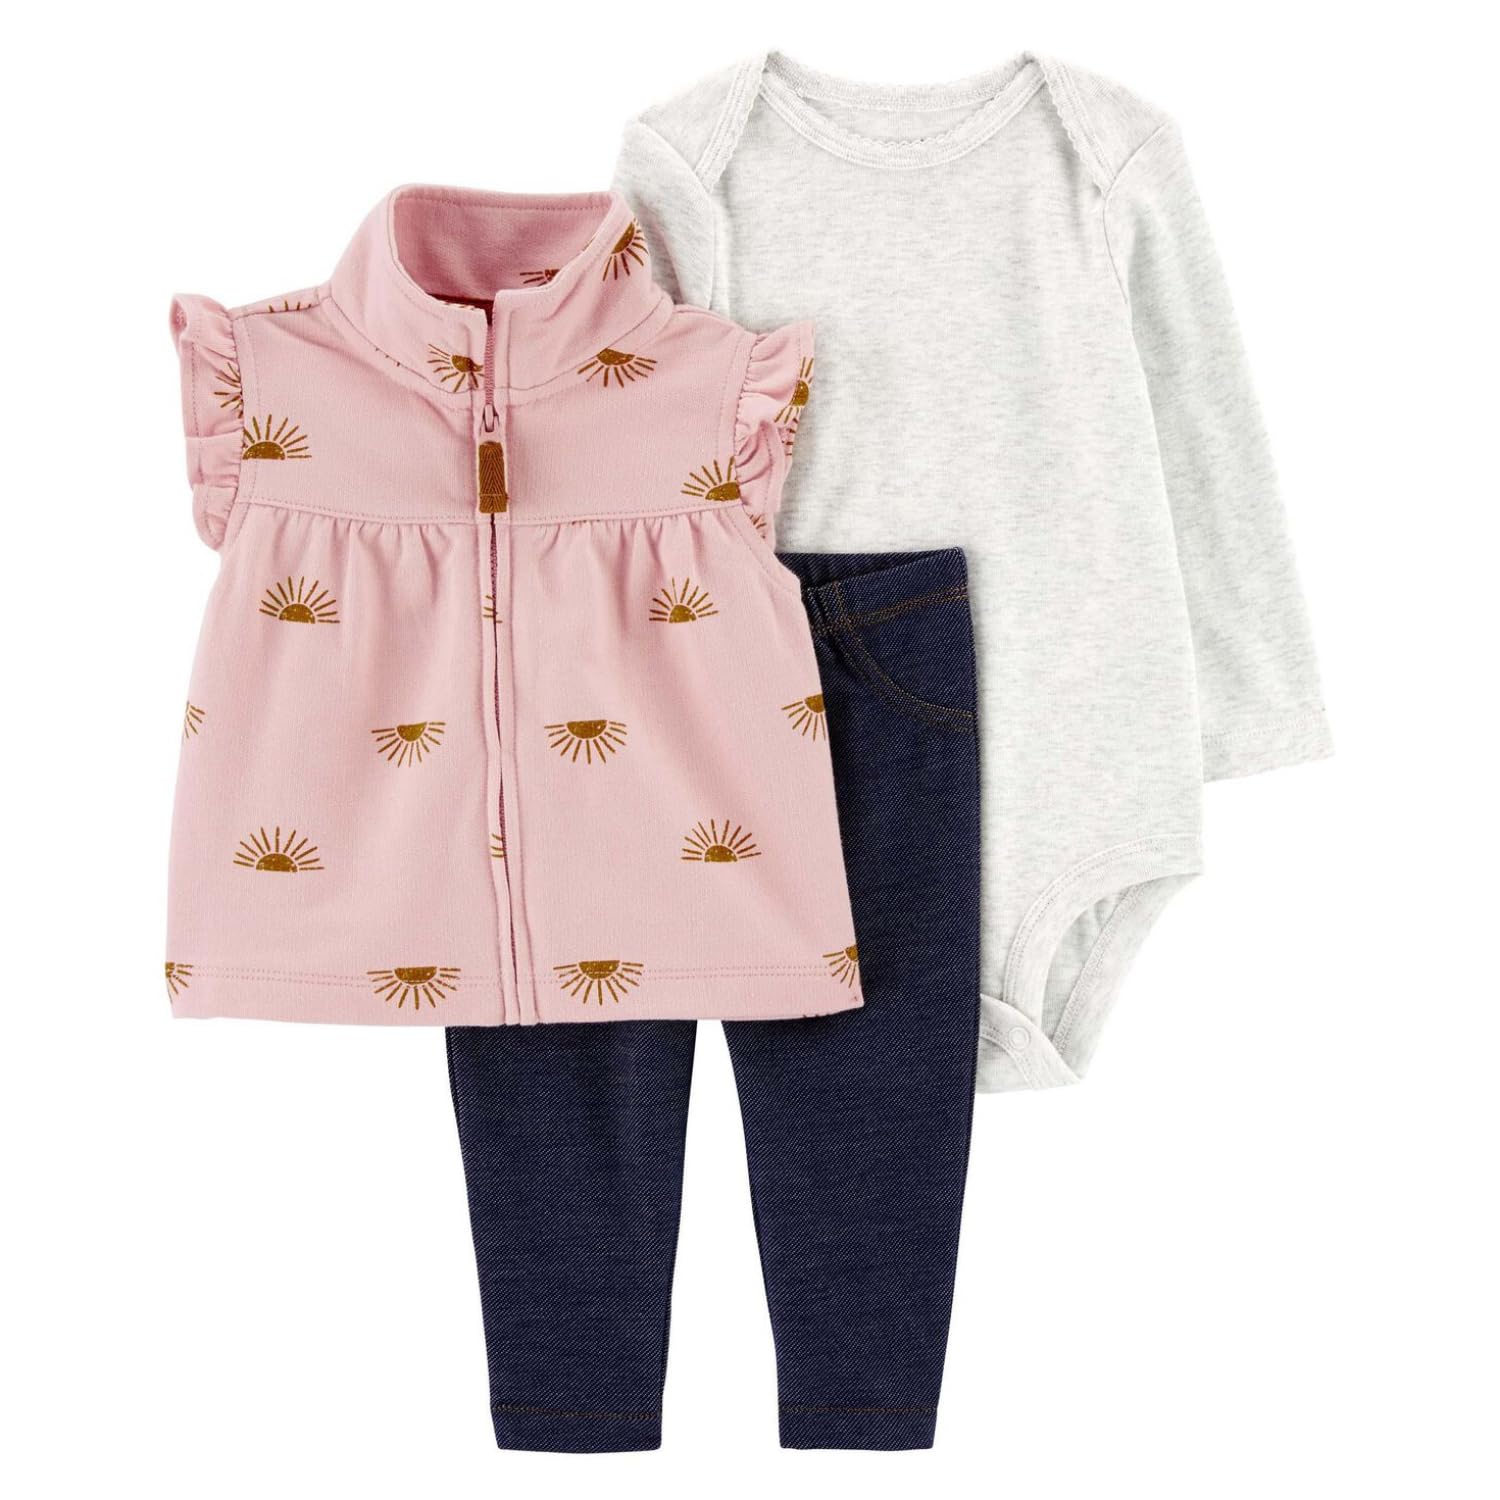 Carter's Baby Girls' 3 Piece Vest Little Jacket Set (Pink/Heather/Navy, 24 Months)